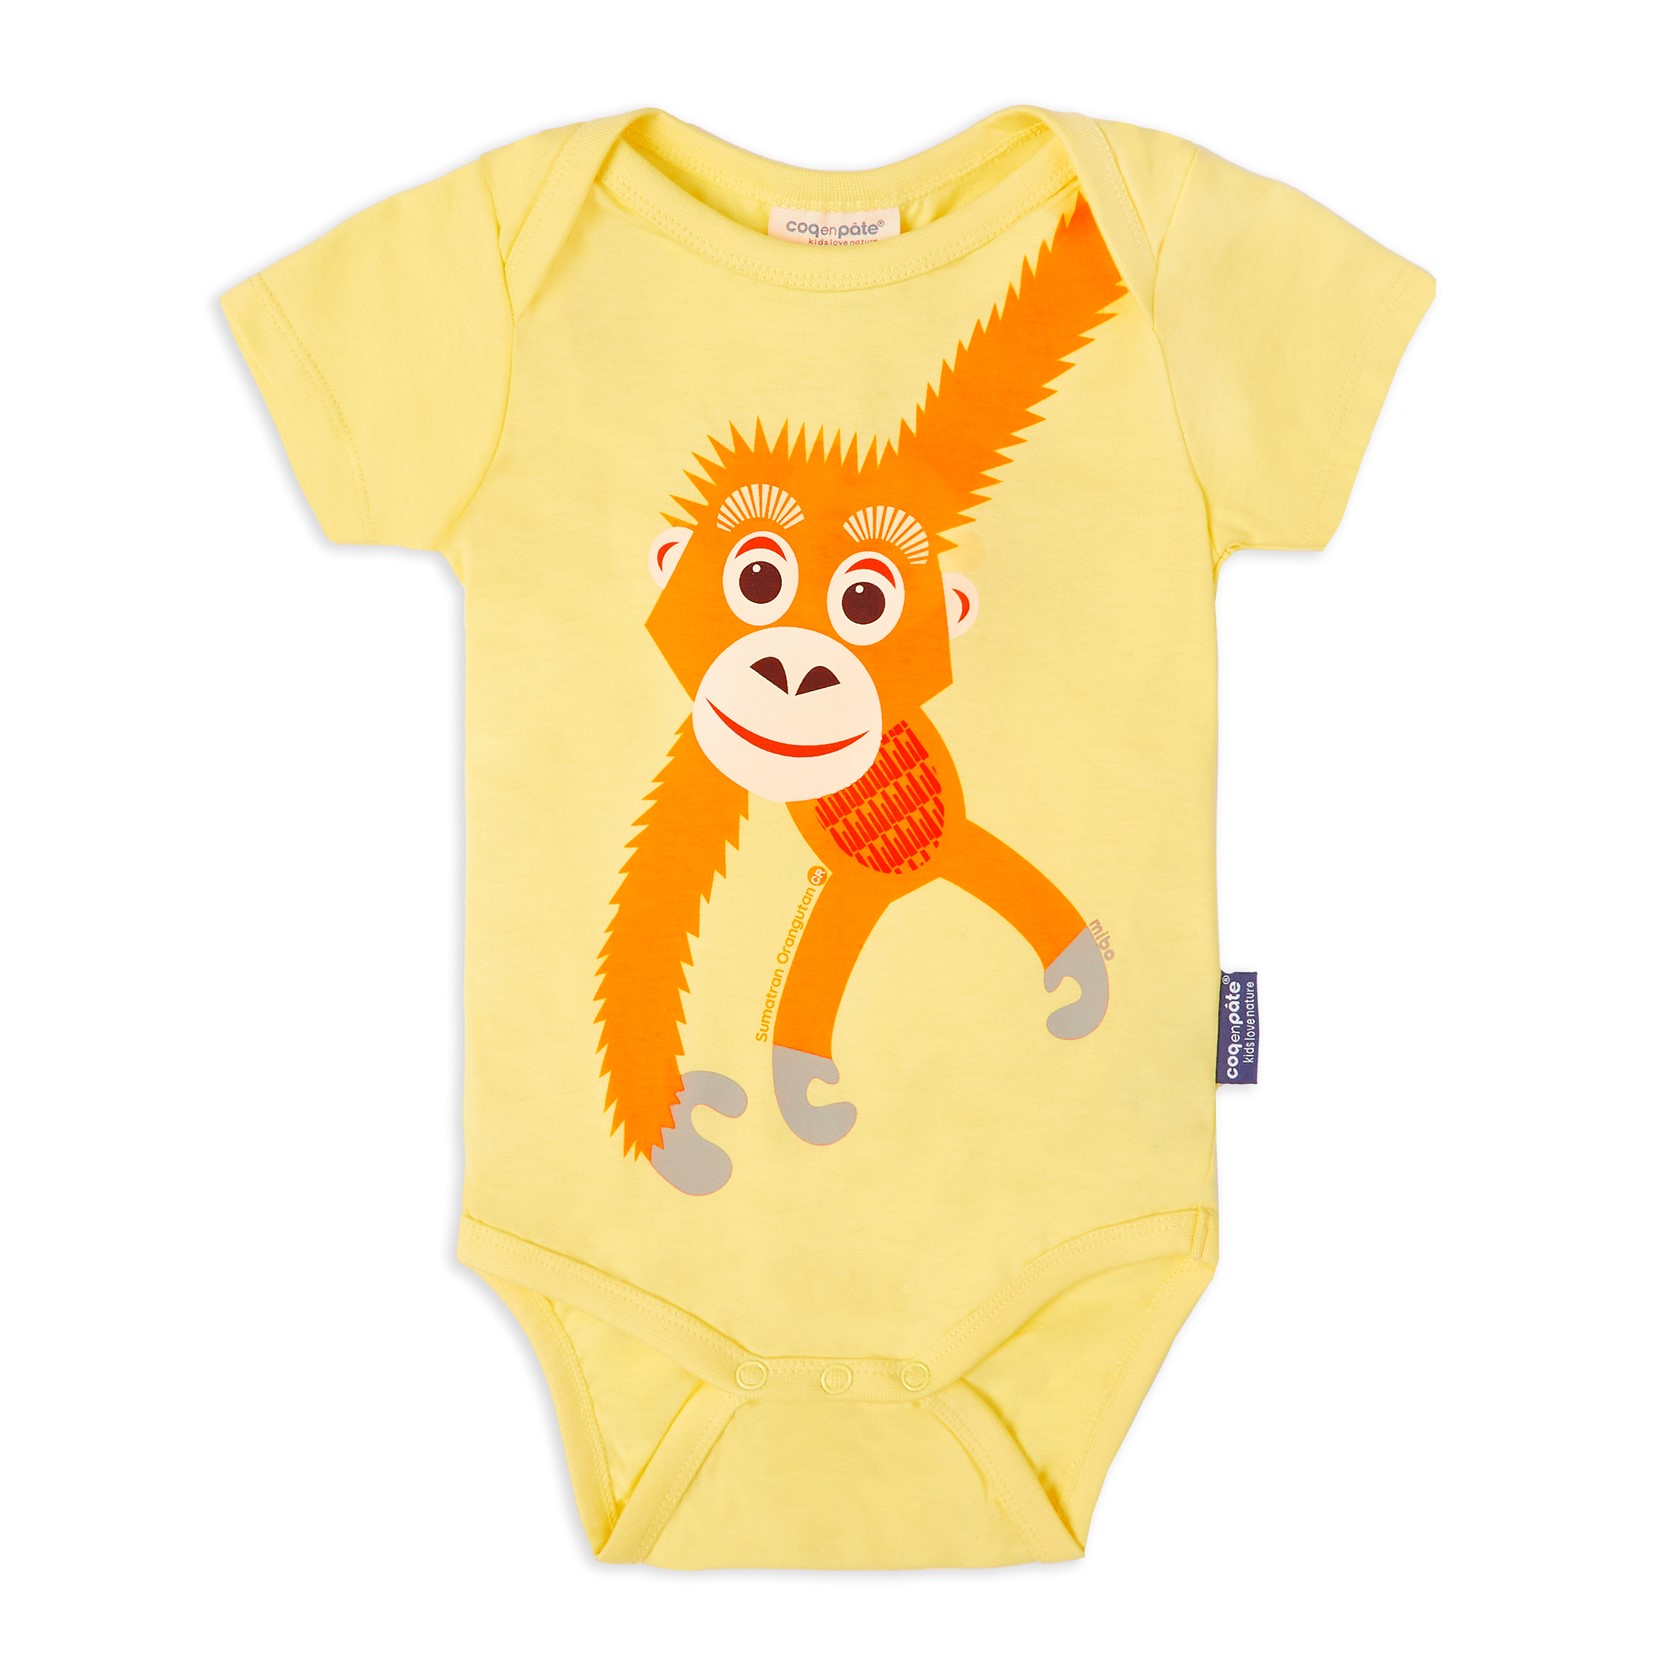 Coq en Pate Orangutan Baby Bodysuit